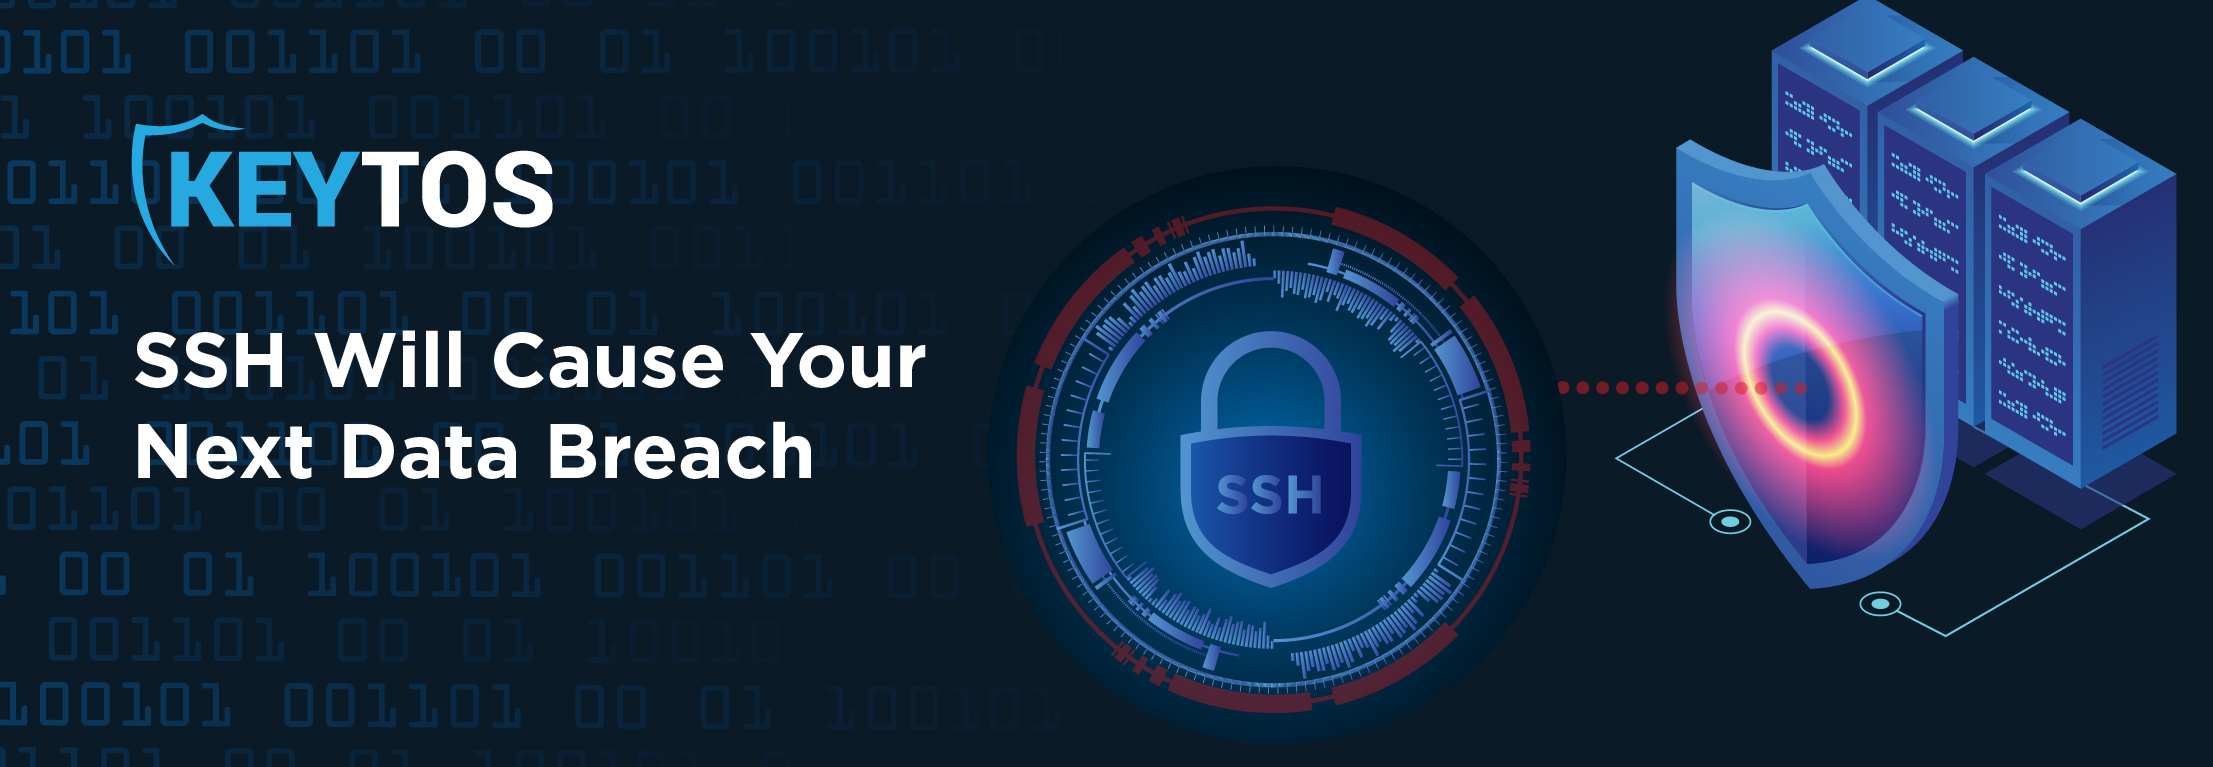 Las claves SSH provocan ataques de datos